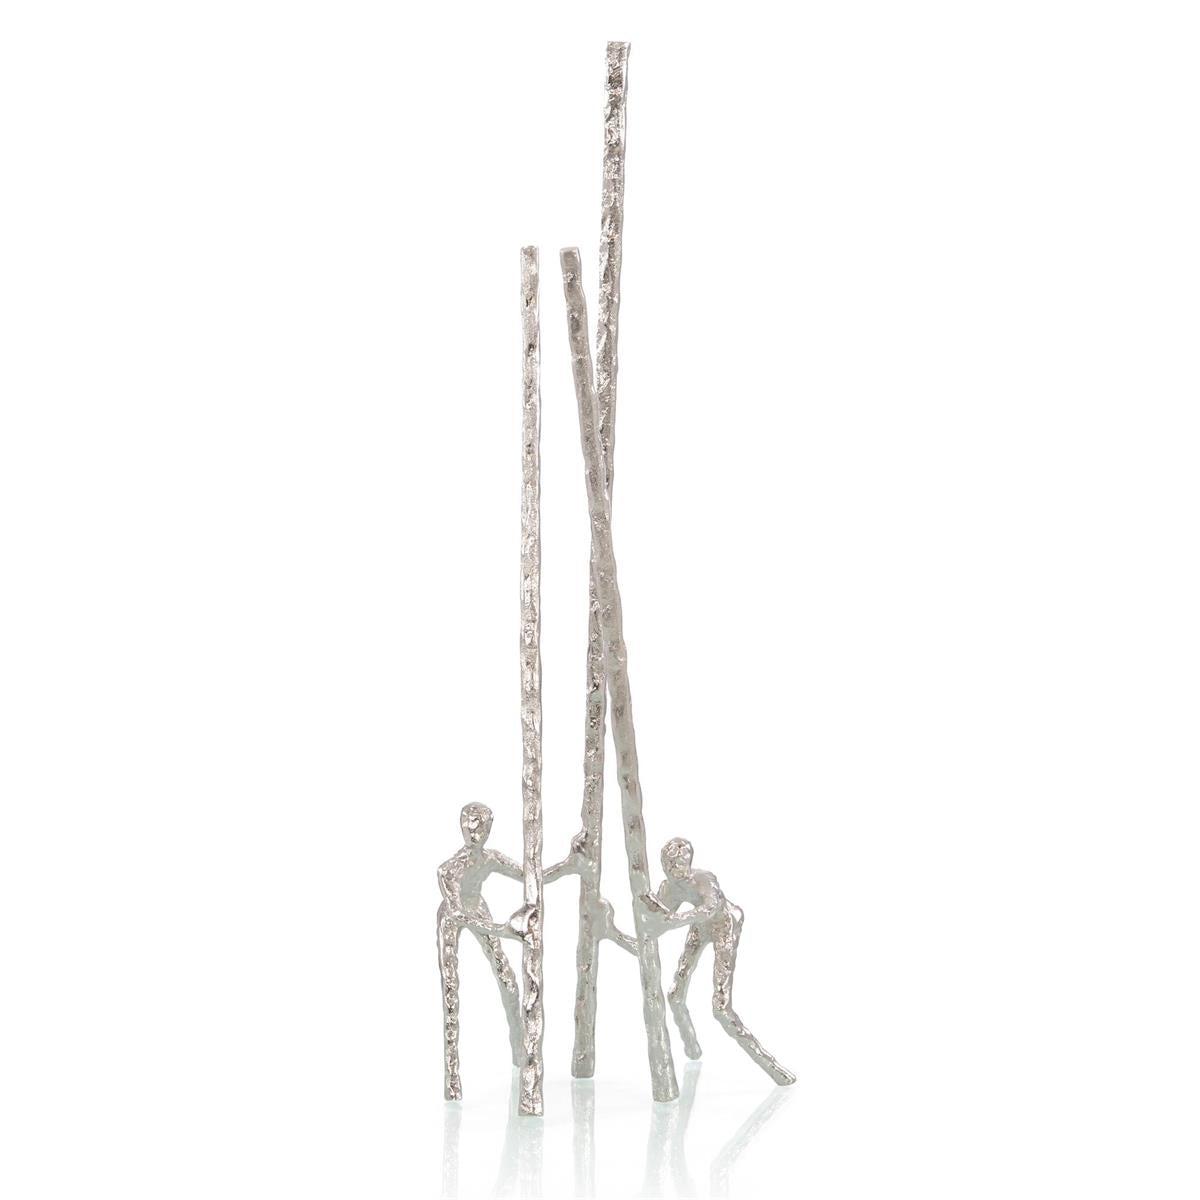 Balancing Nickel Sculpture-John Richard-Sculptures & Objects-Artistic Elements